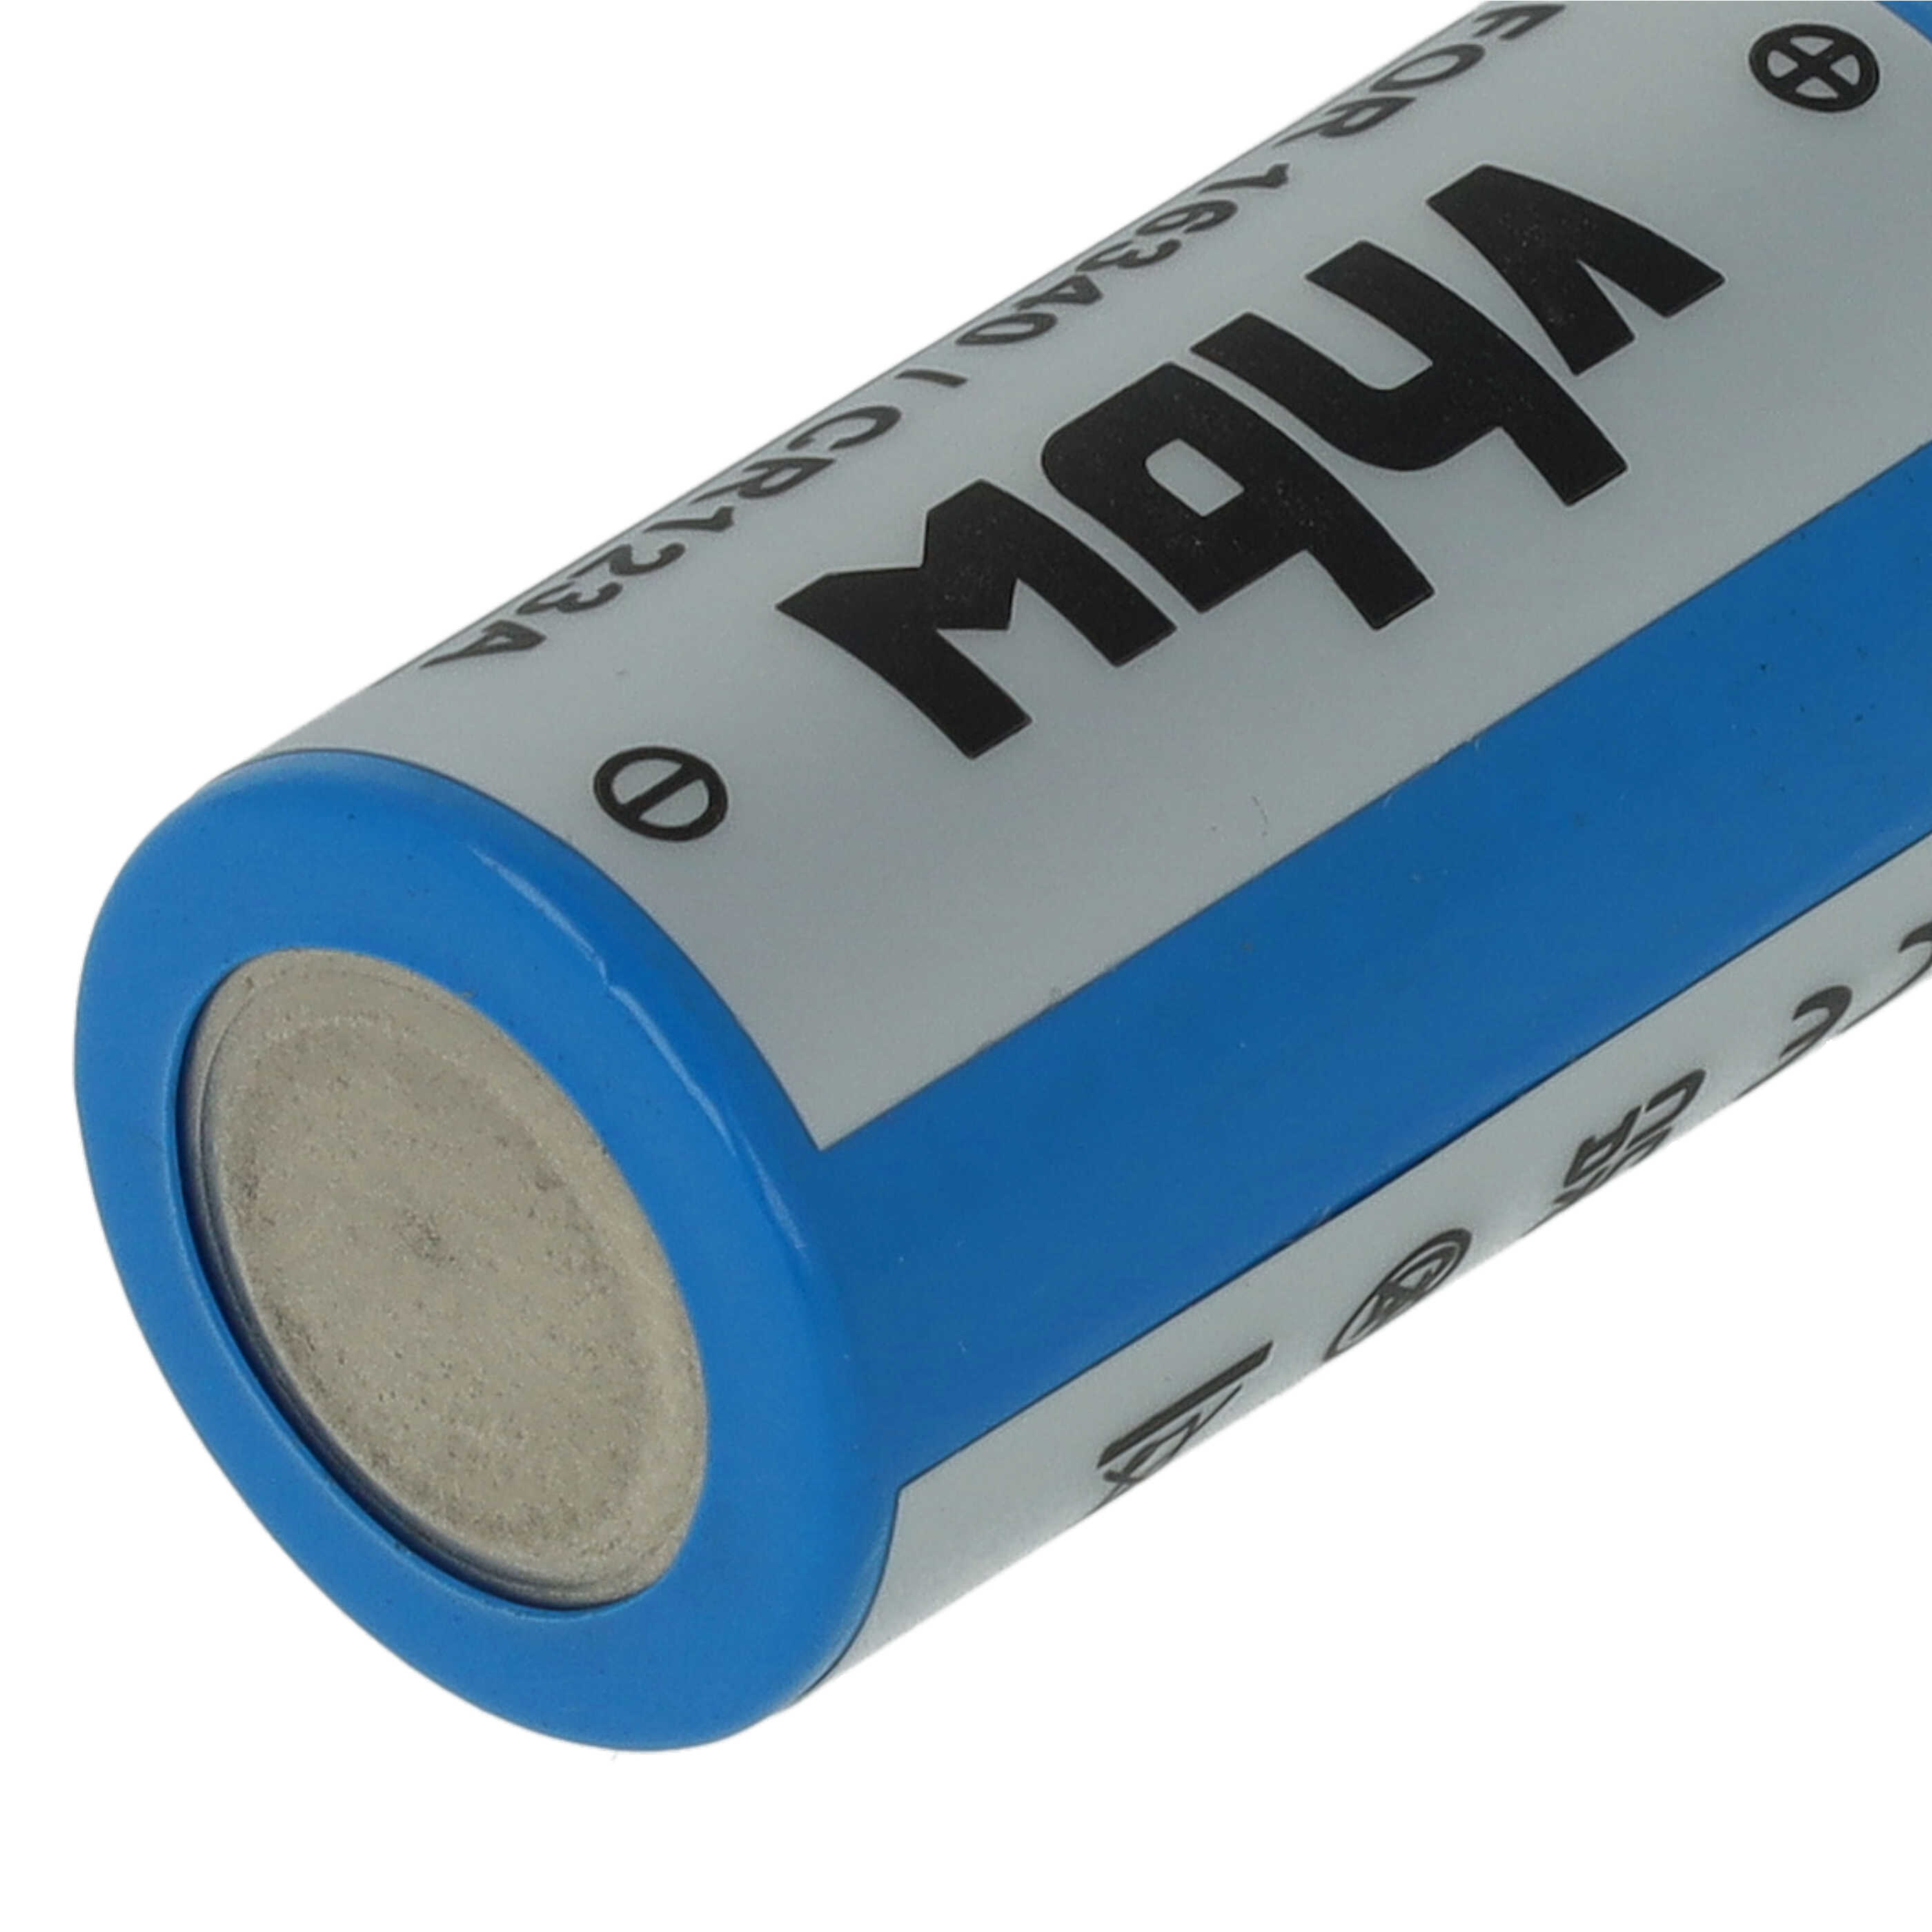 Batteria (2x pezzo) - 700mAh 3,6V Li-Ion